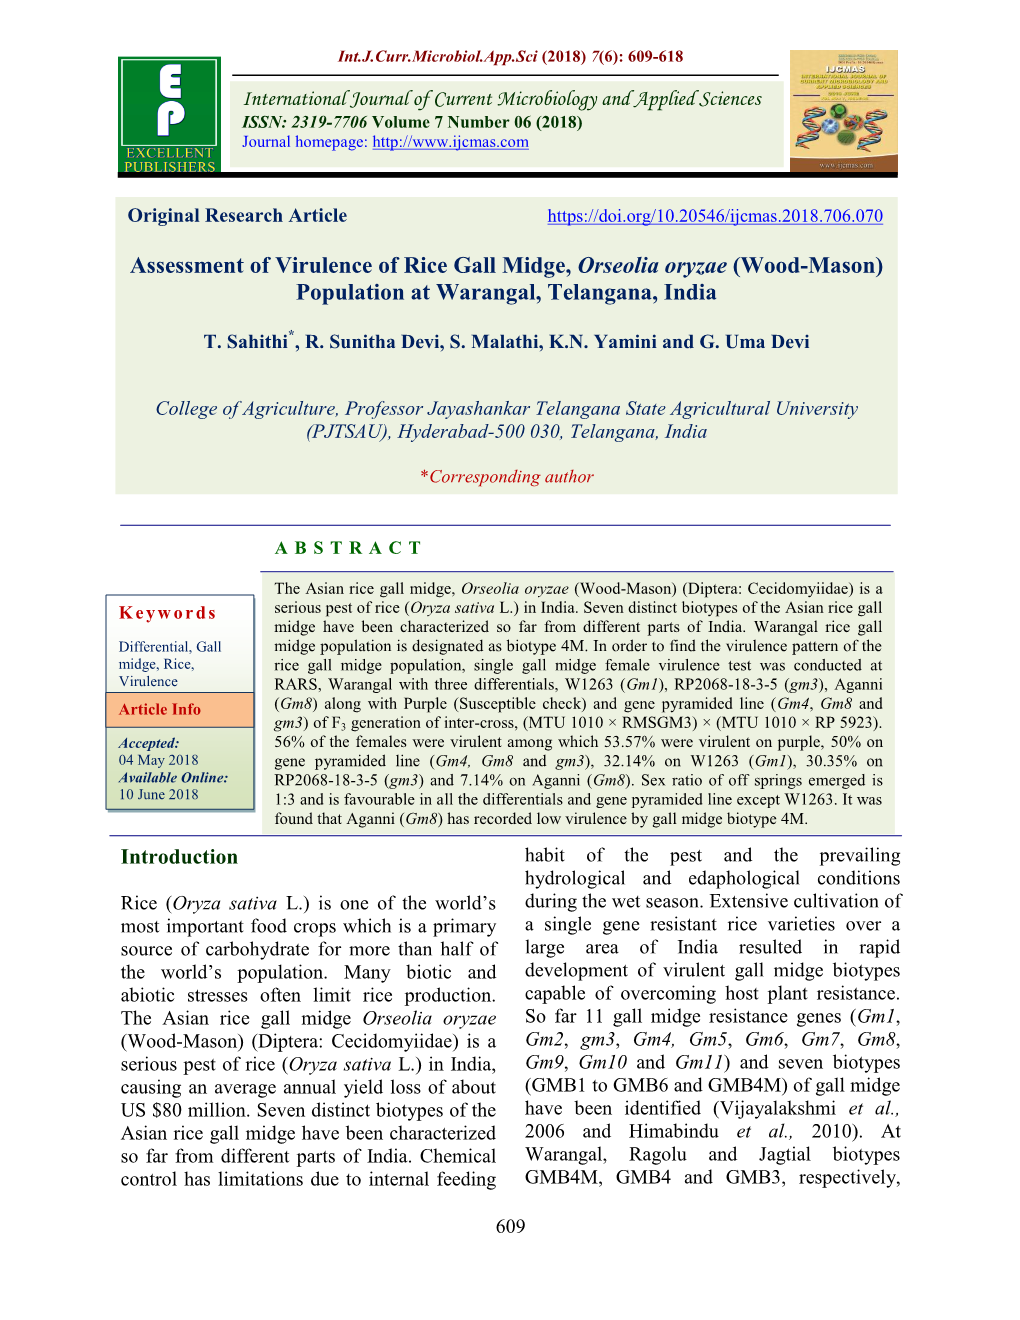 Assessment of Virulence of Rice Gall Midge, Orseolia Oryzae (Wood-Mason) Population at Warangal, Telangana, India